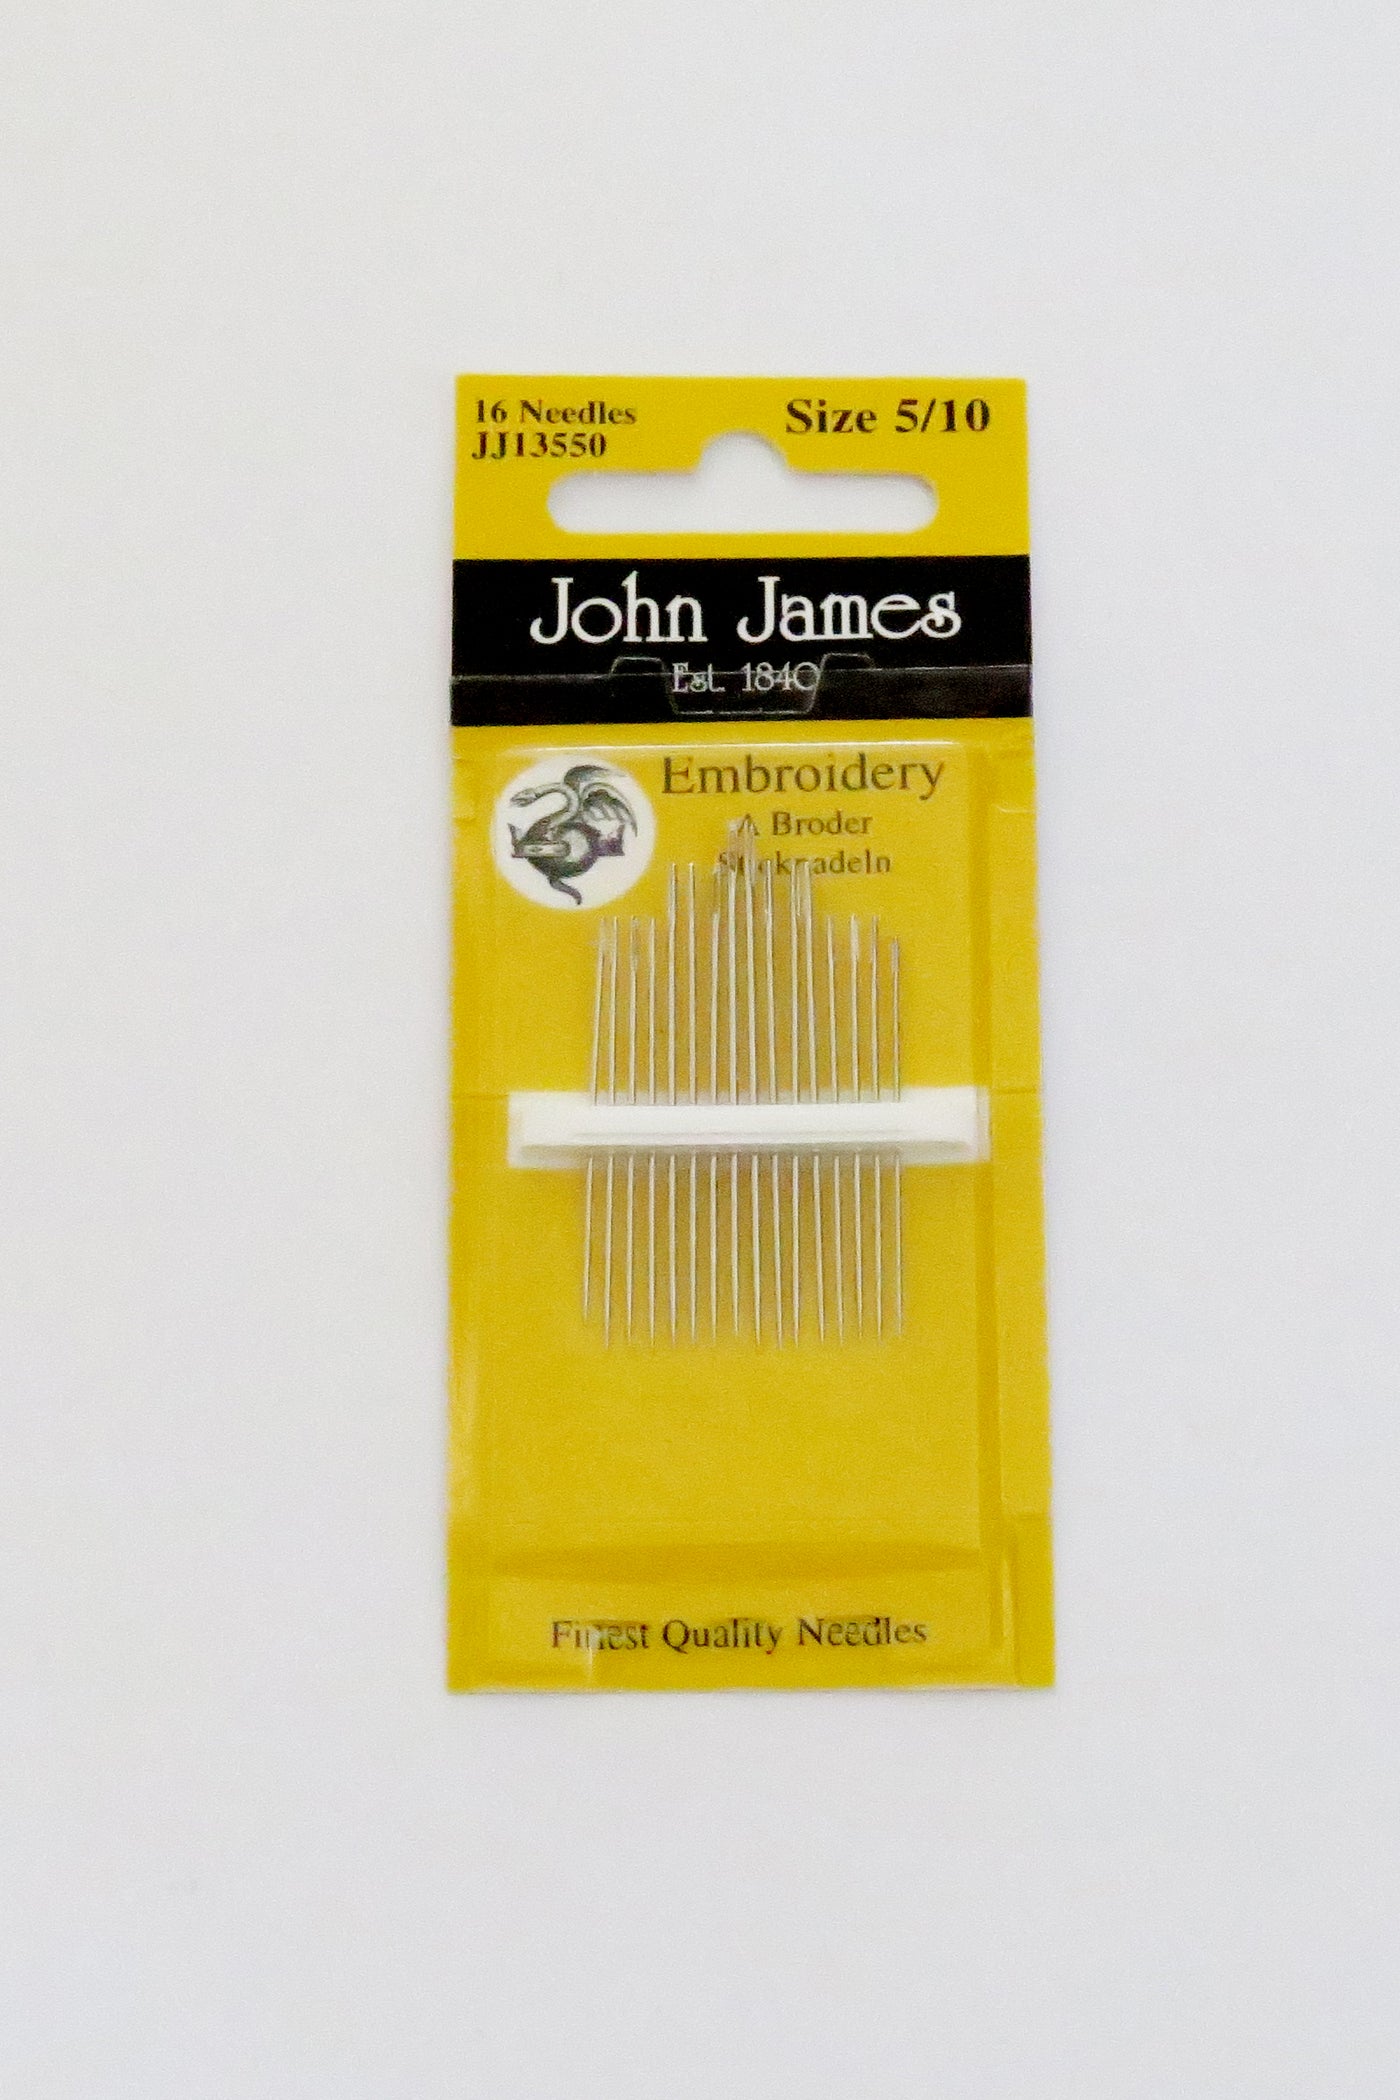 John James Embroidery Needles Size 5/10